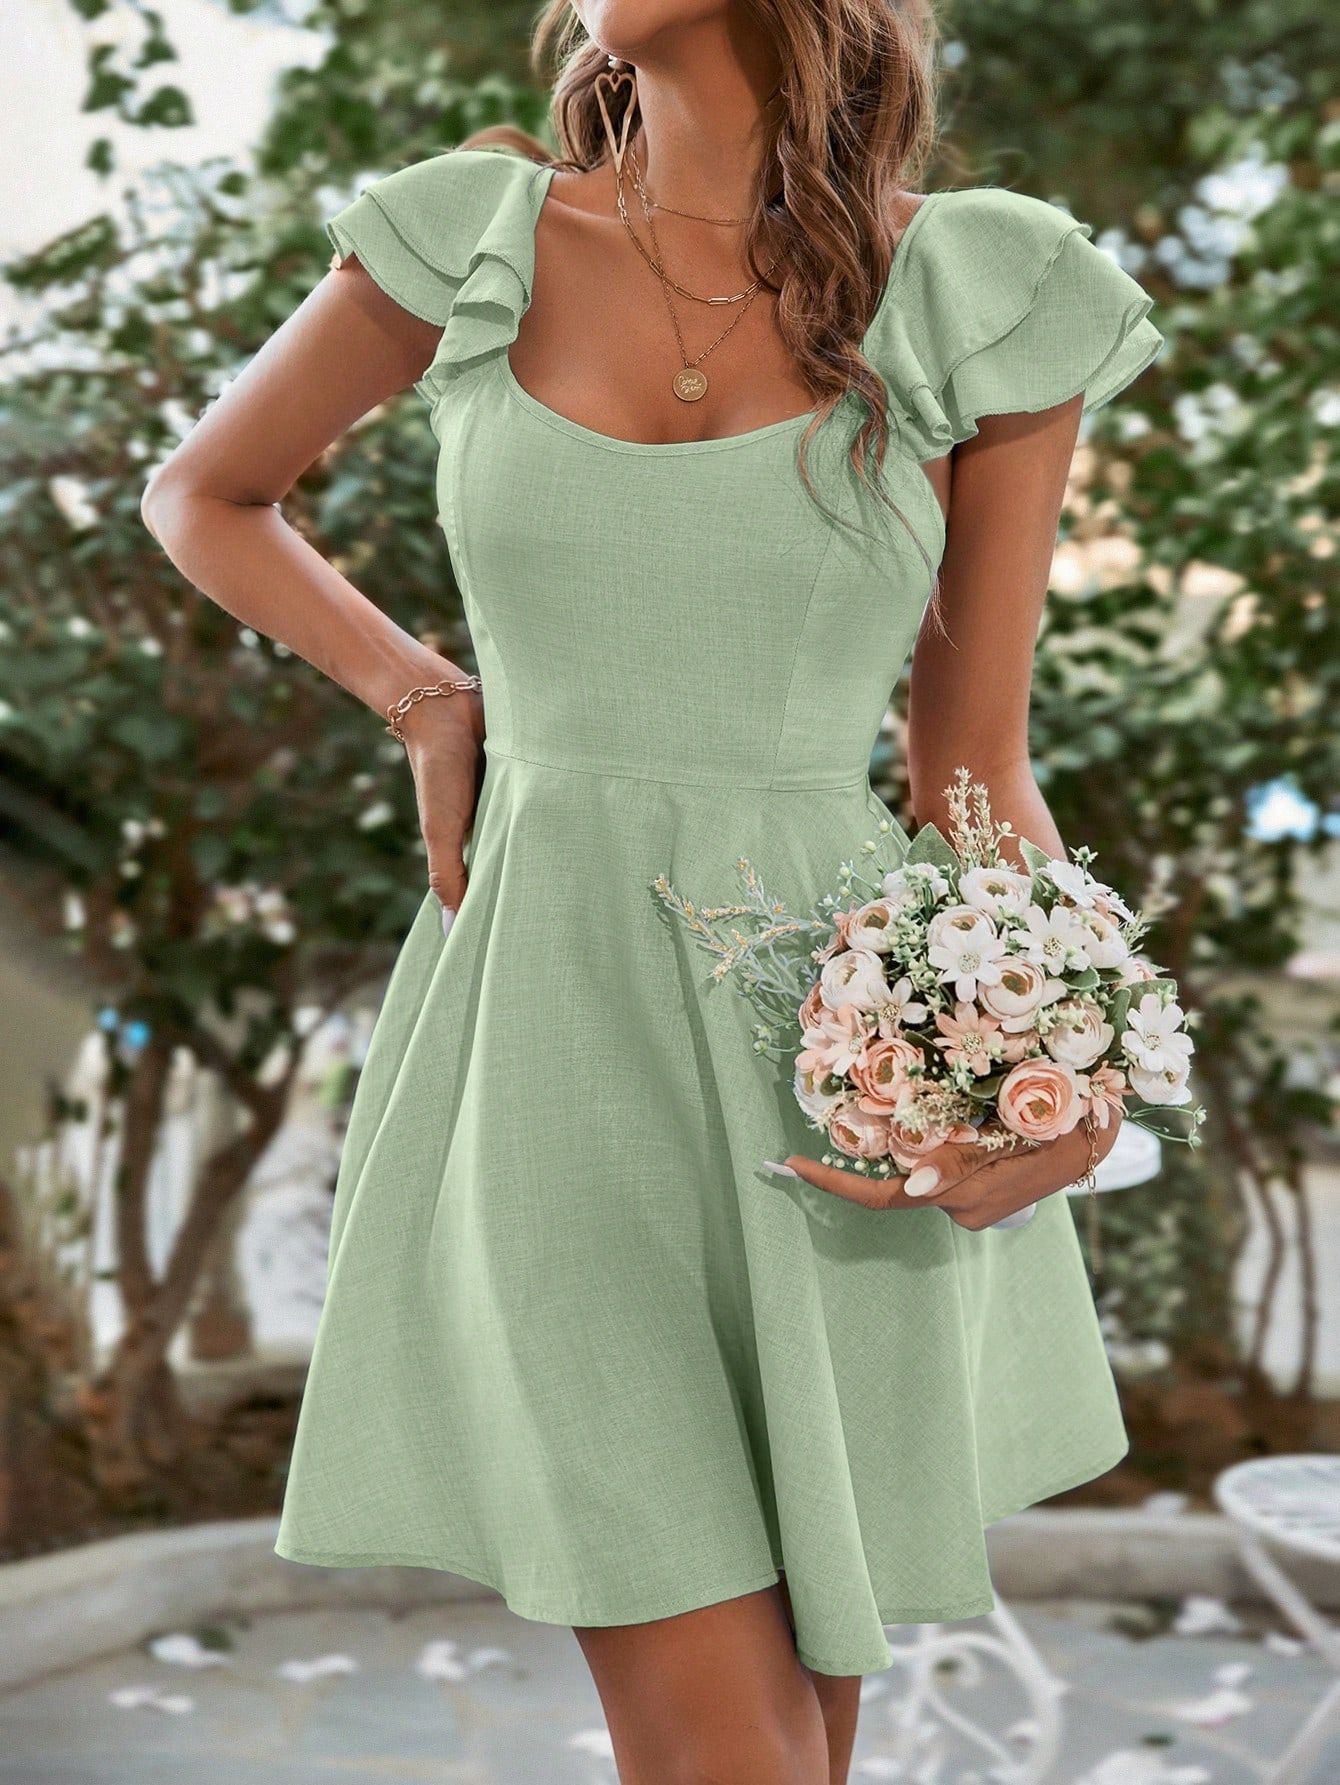 Best 13 Seafoam Green Dress Outfit Ideas for Women